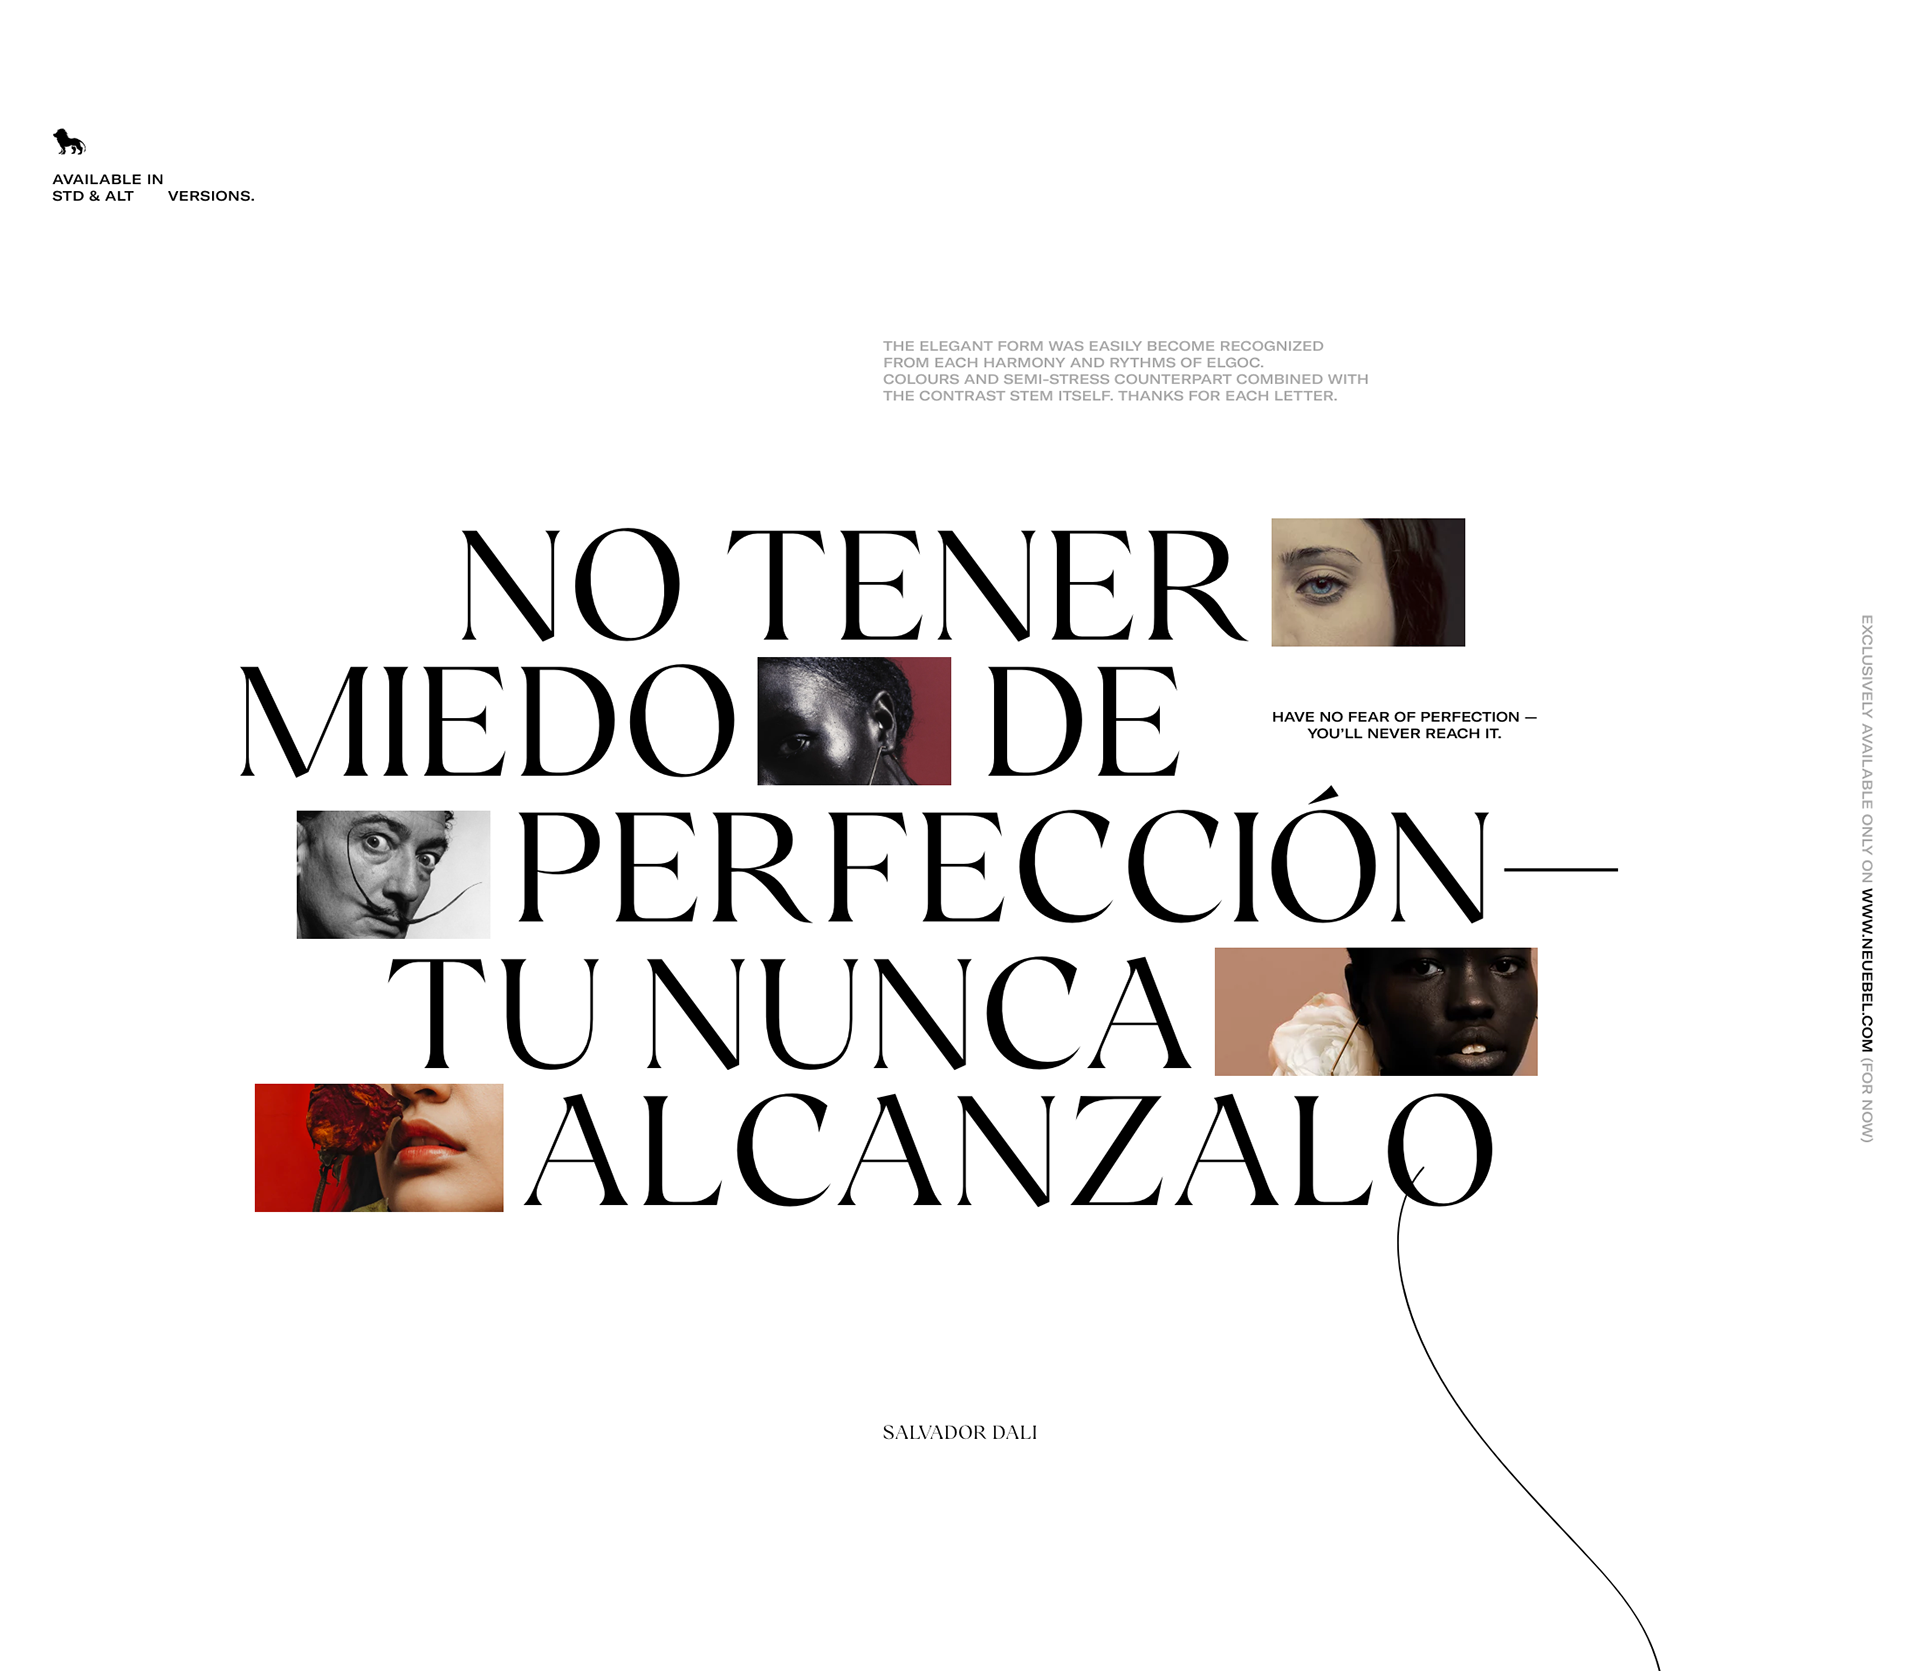 Elgoc Std & Alt - Free Typeface - Elgoc Std & Alt - Free Typeface -   8 beauty Editorial design ideas